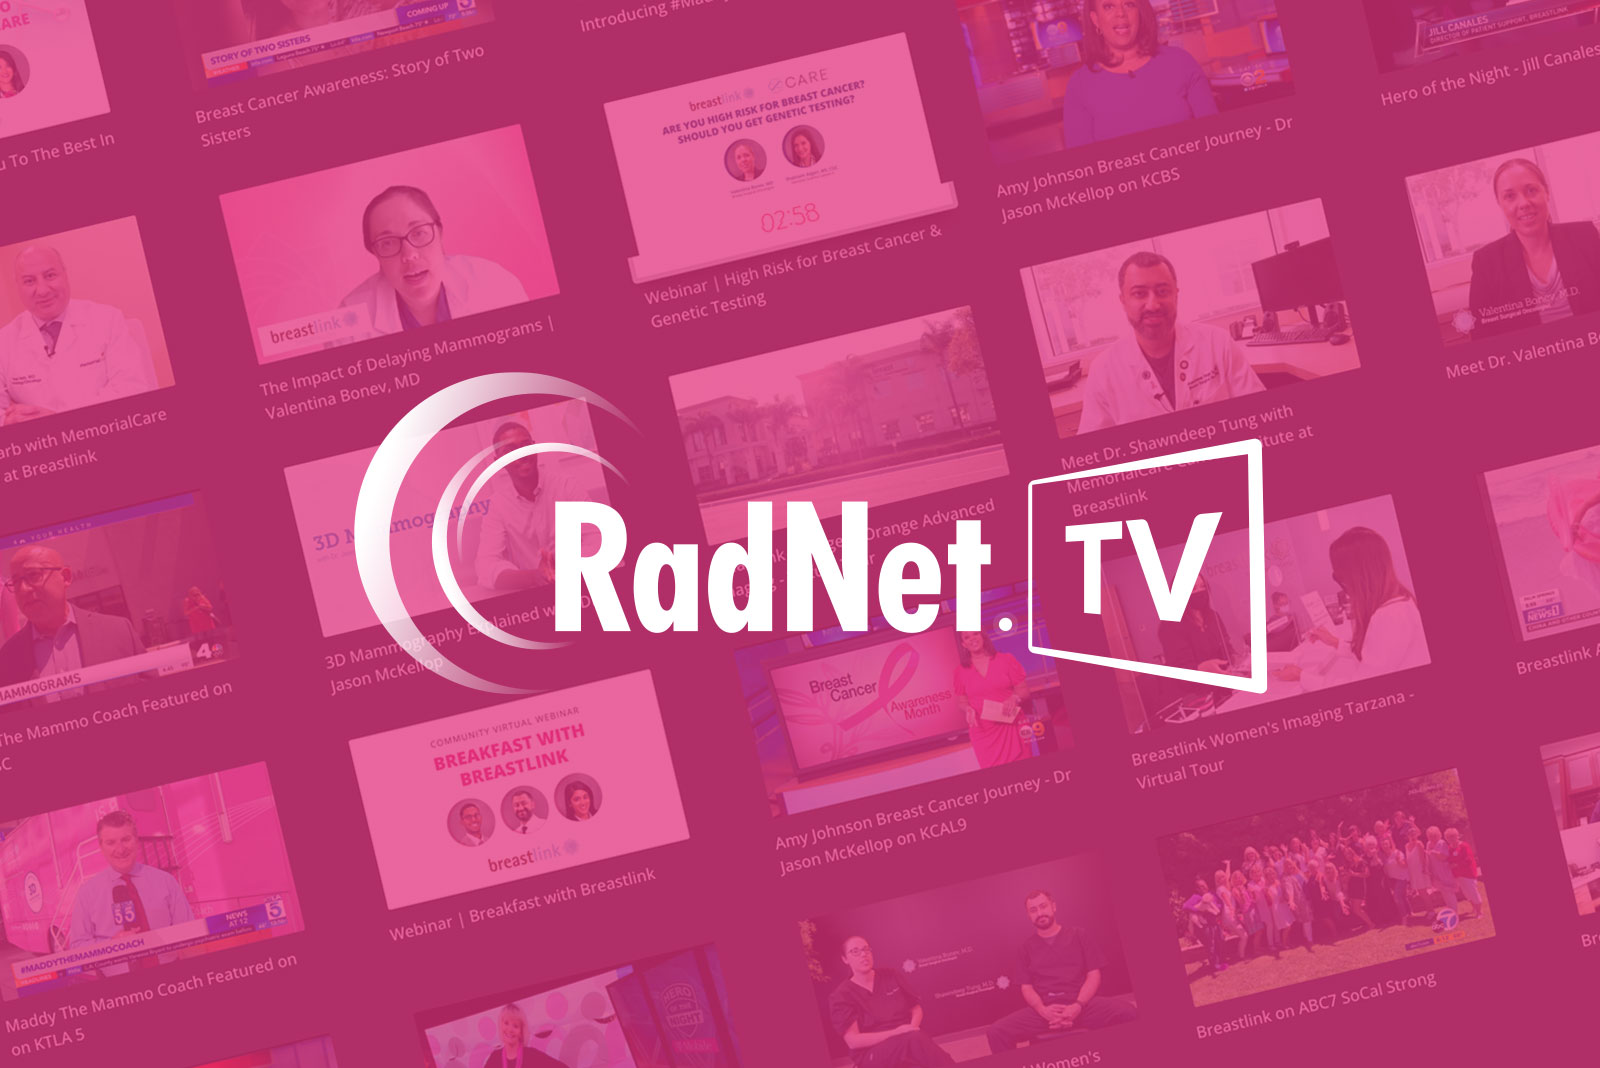 Breastlink on RadNet TV